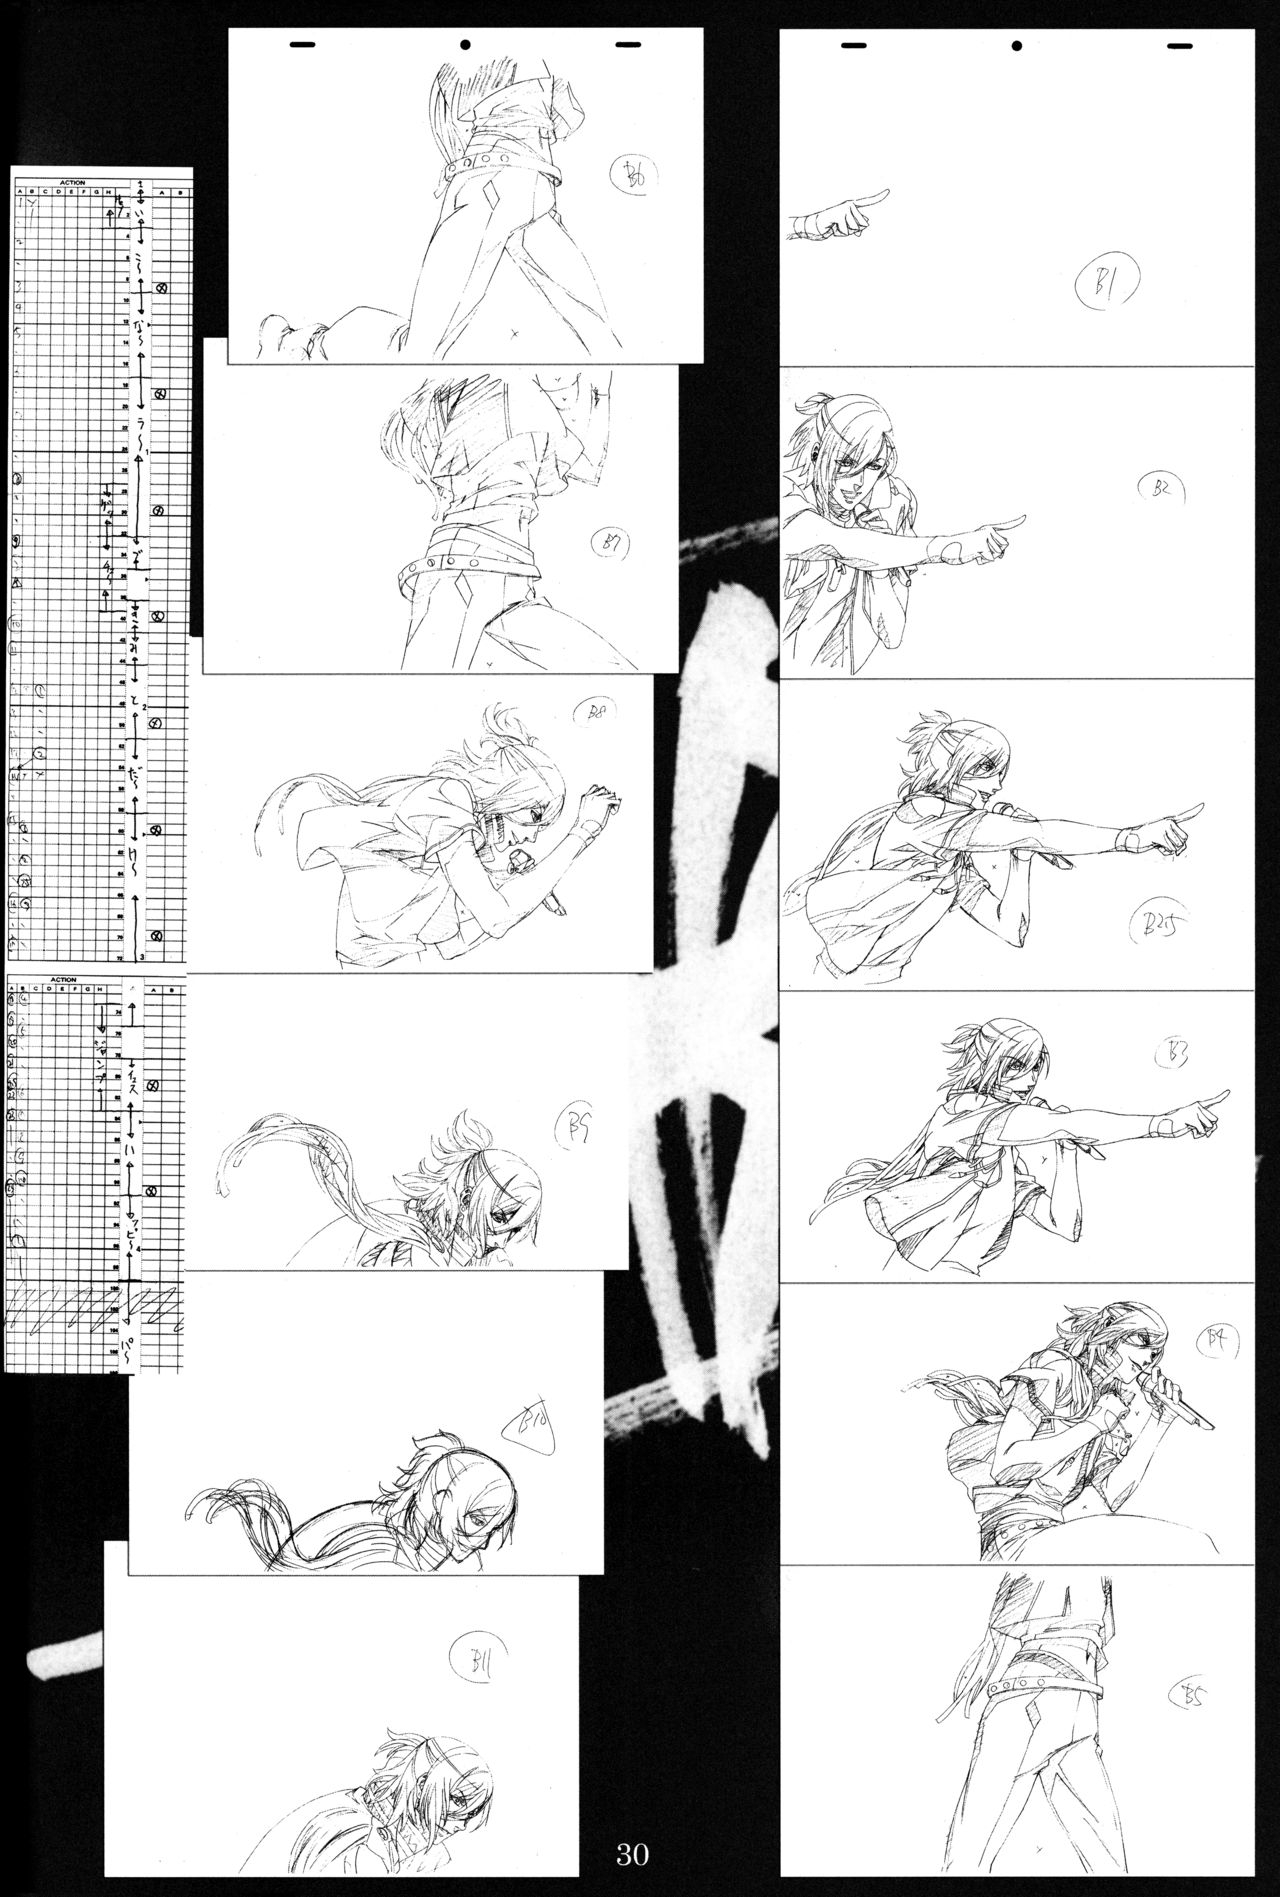 Burning G: Yosuke Kabashima Animator 20th Anniversary Book 28